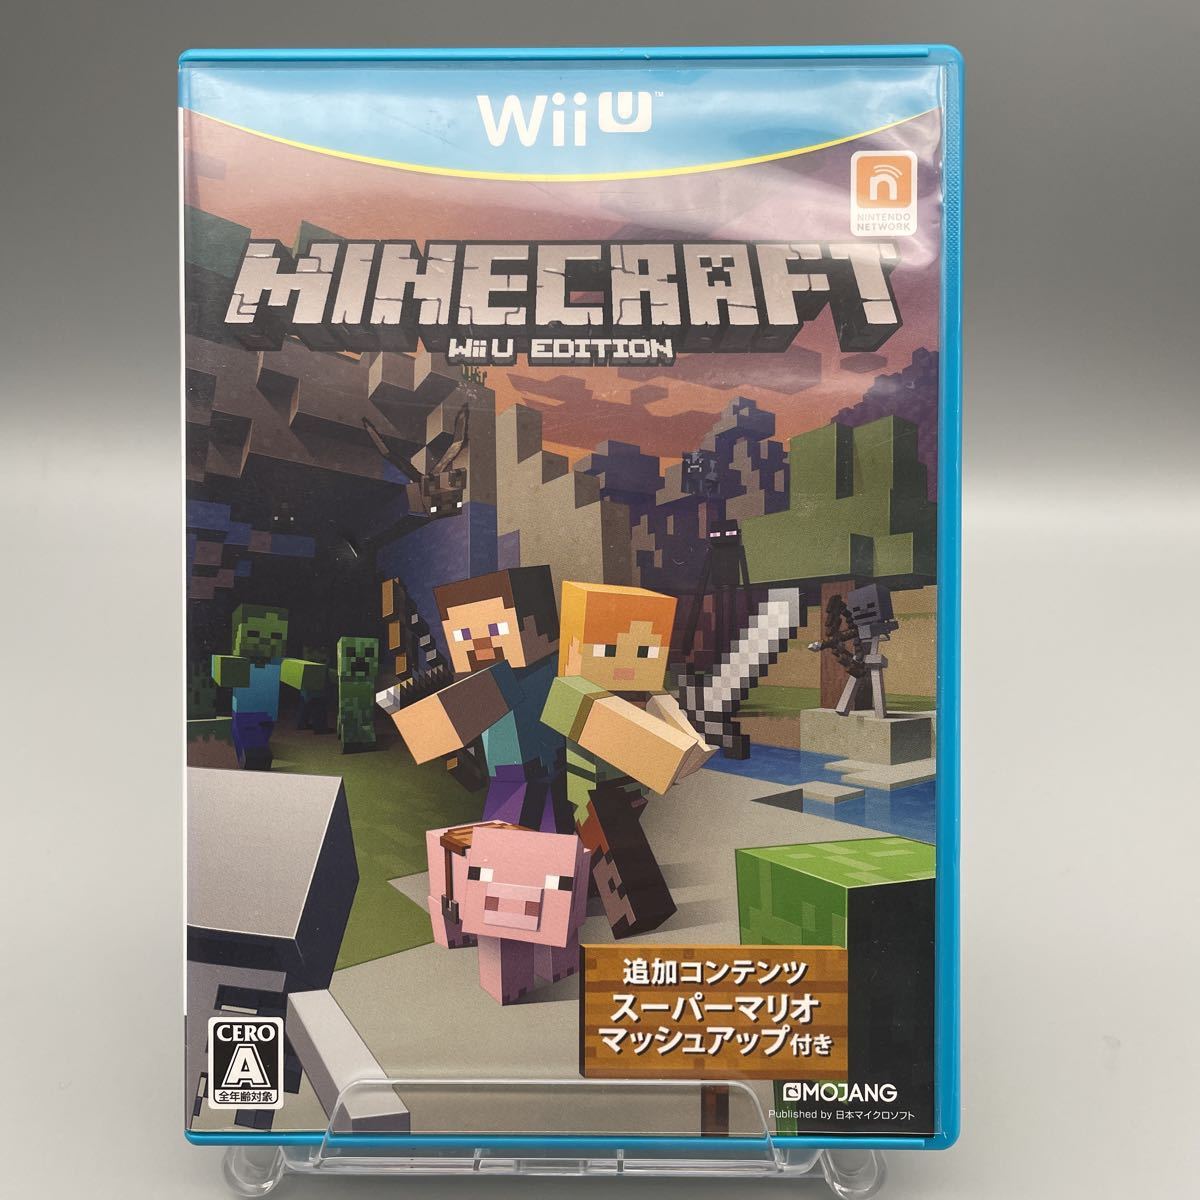 Wiiu マインクラフト Minecraft Wiiu Edition Wii U専用ソフト 売買されたオークション情報 Yahooの商品情報をアーカイブ公開 オークファン Aucfan Com